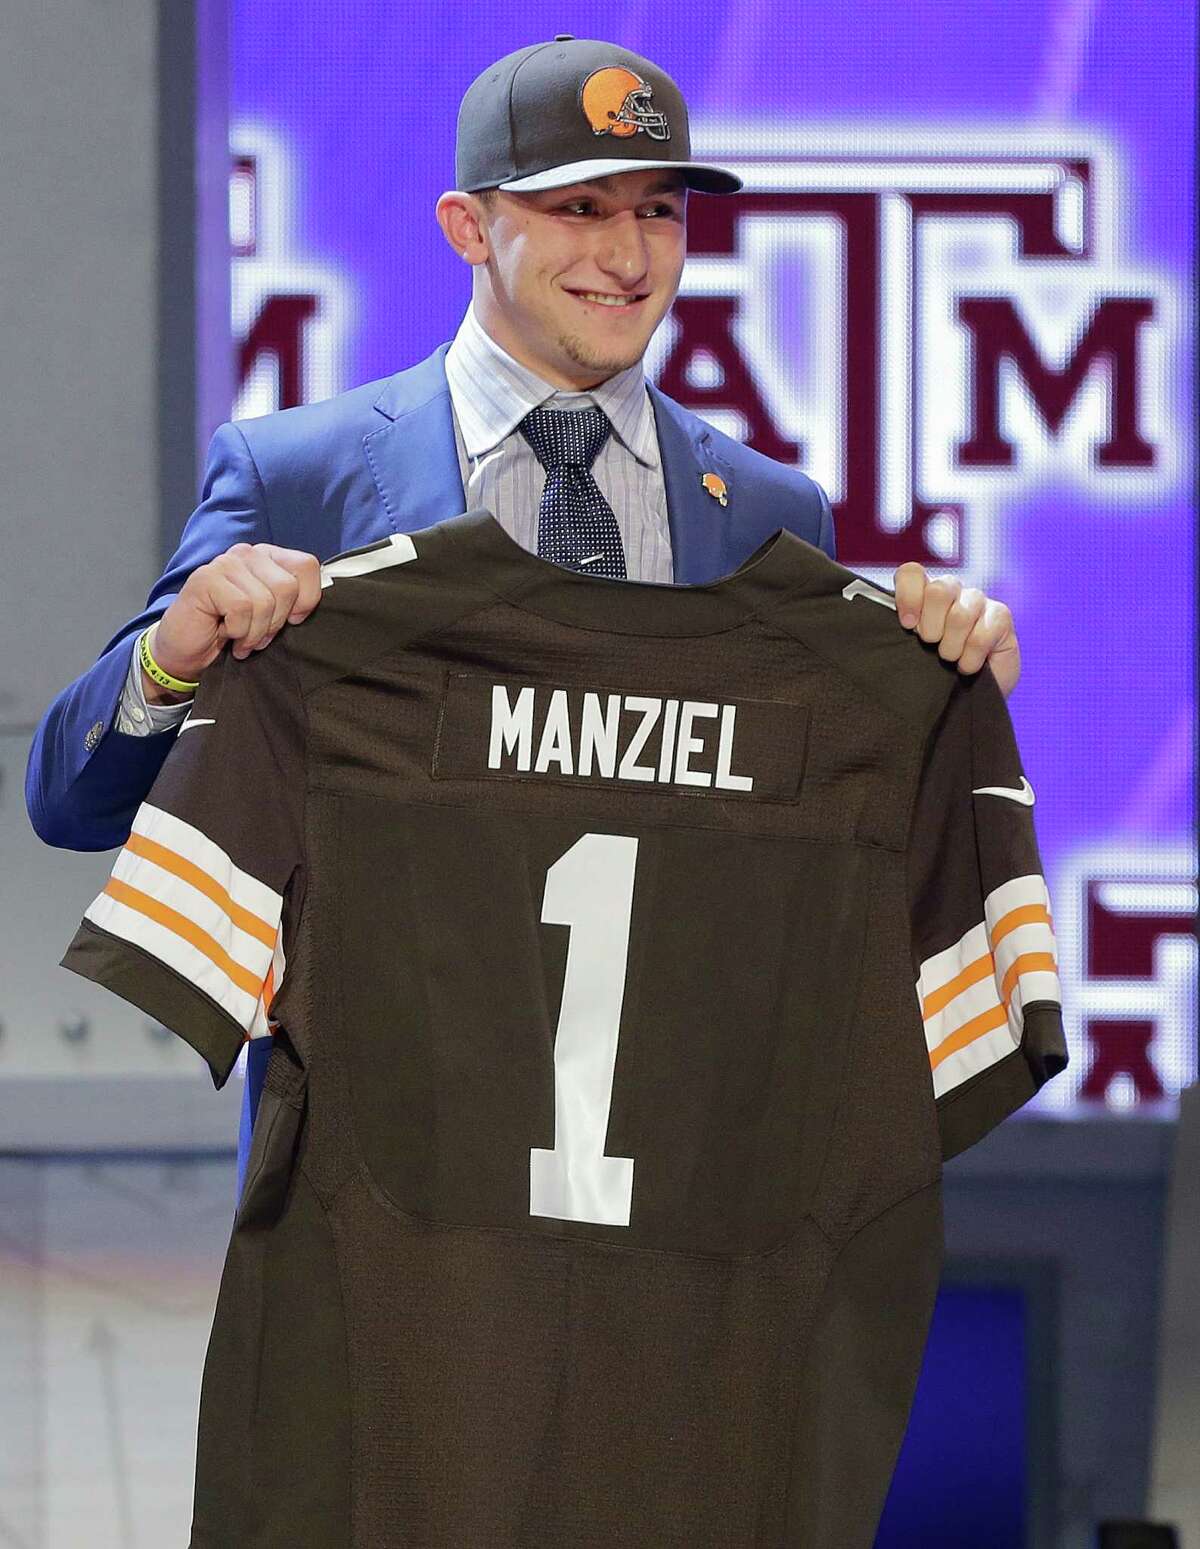 Manziel leads NFL in first-quarter jersey sales